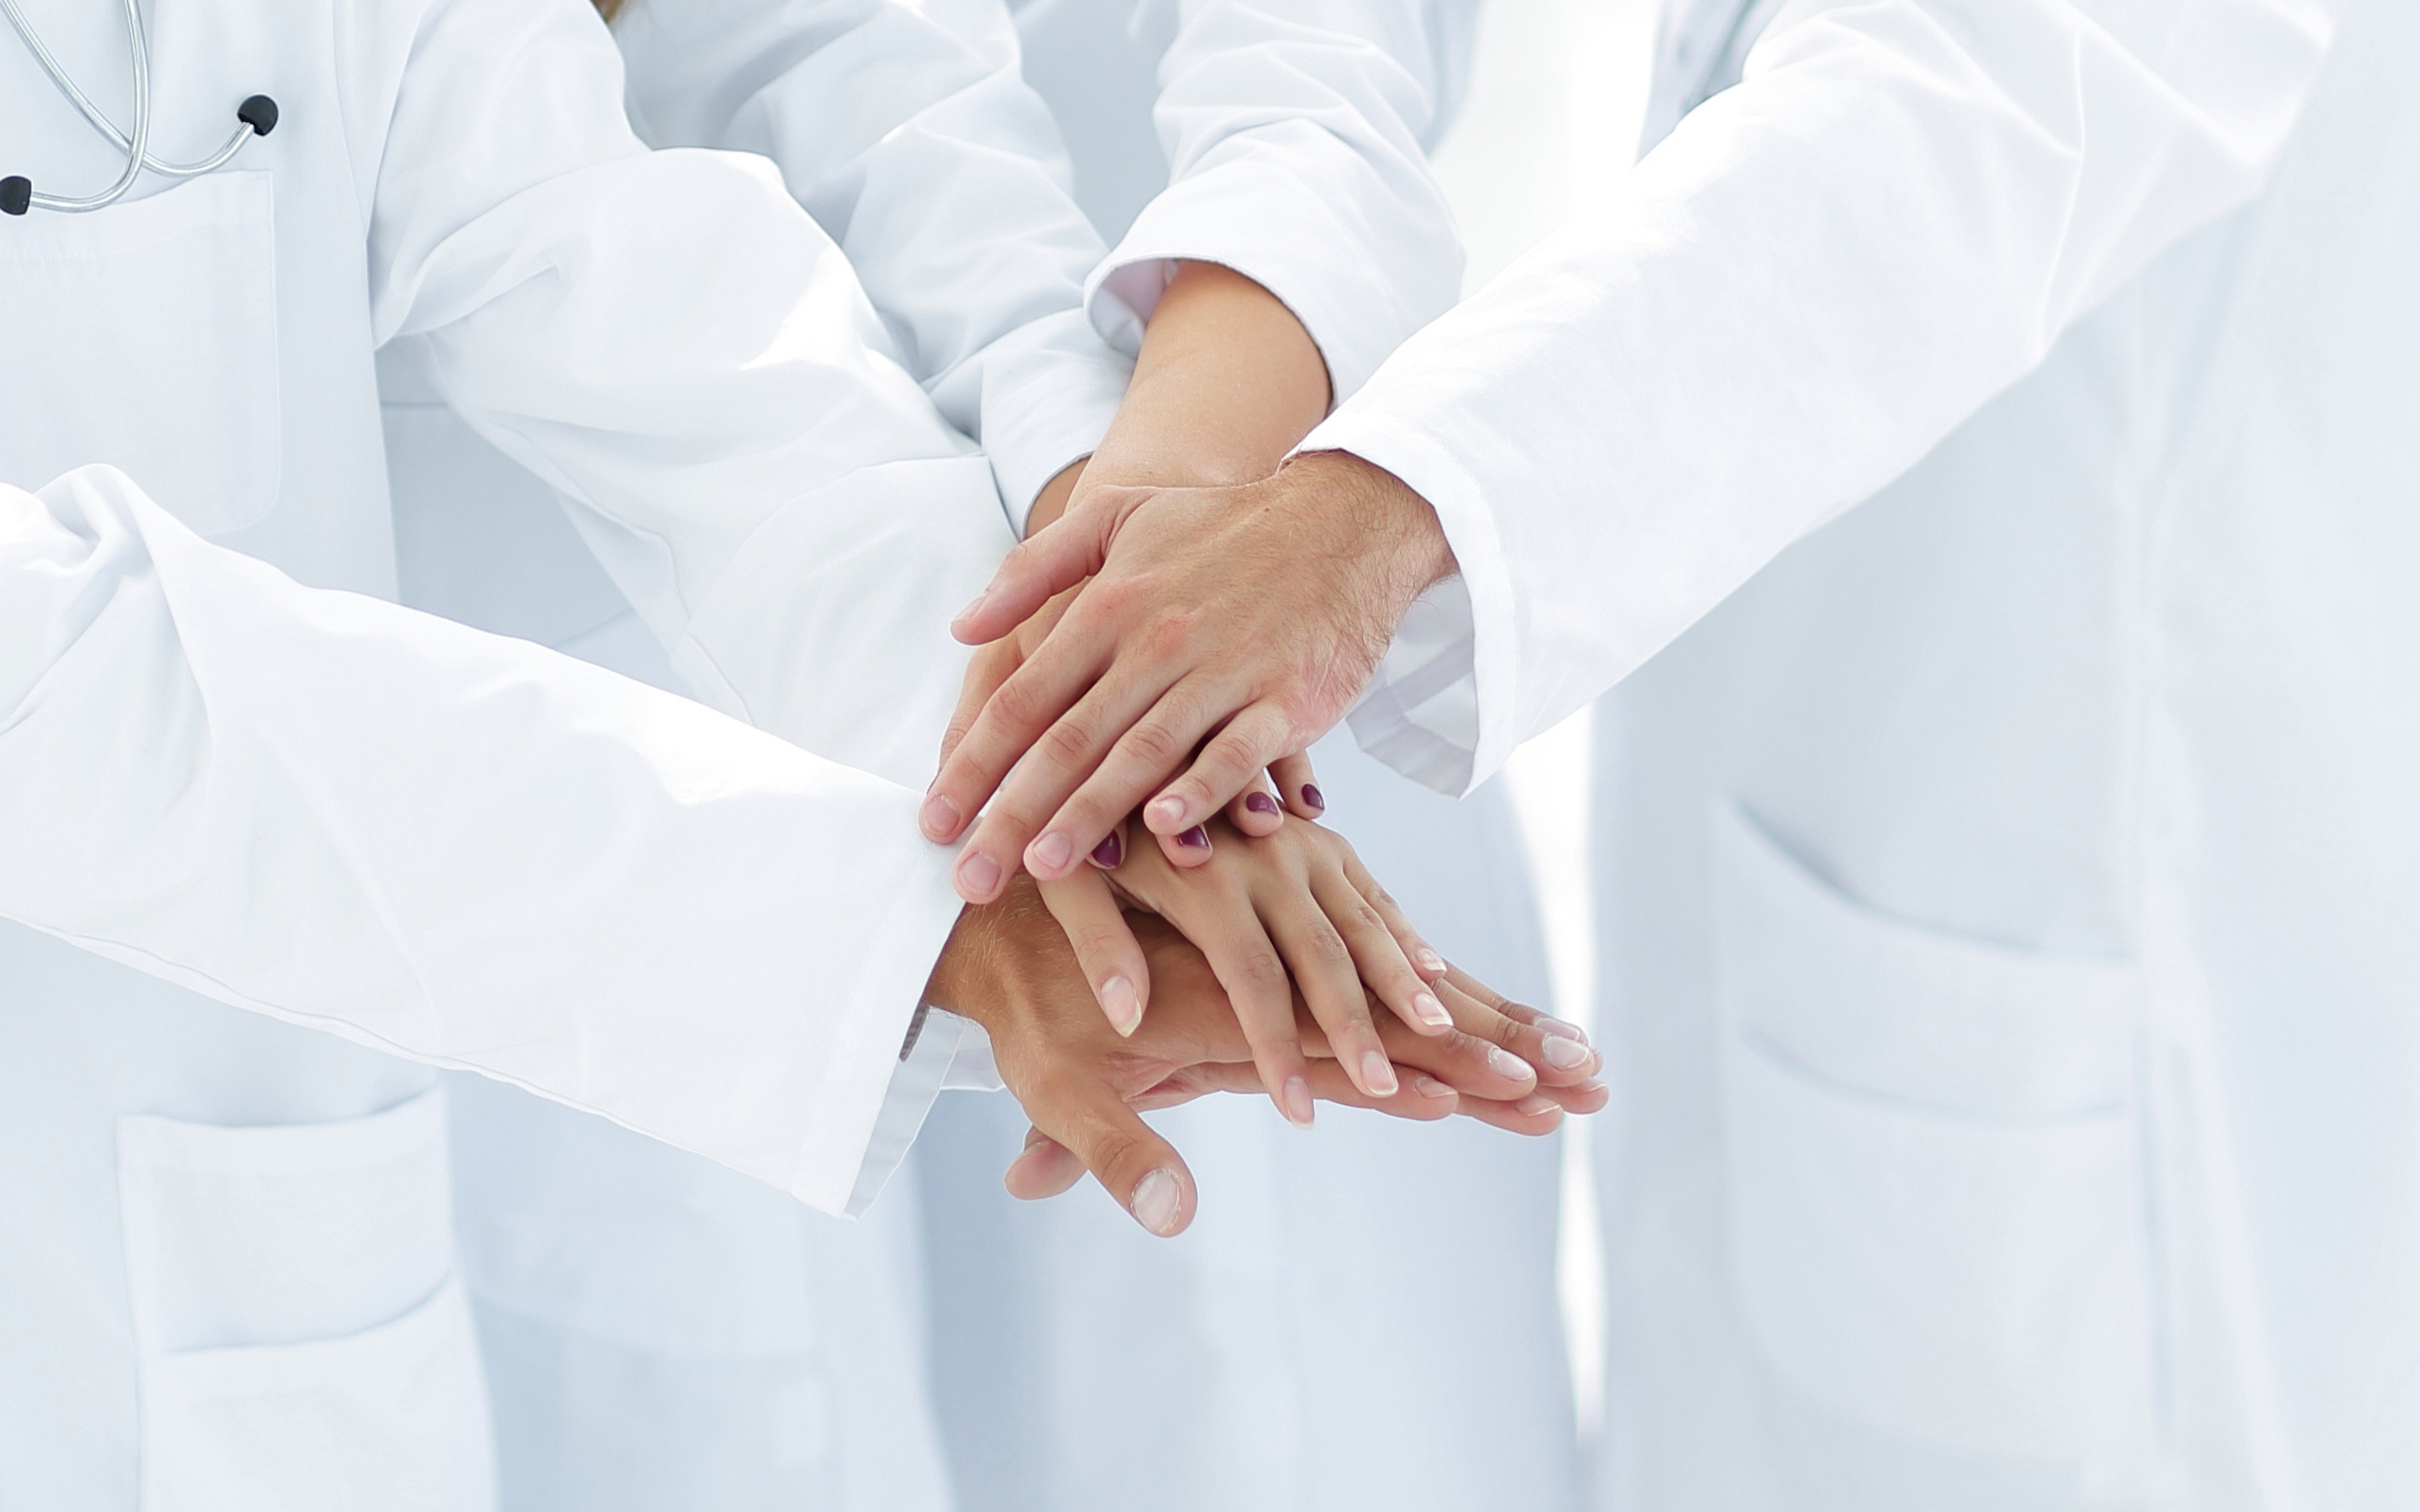 Doctors Team hand on hand